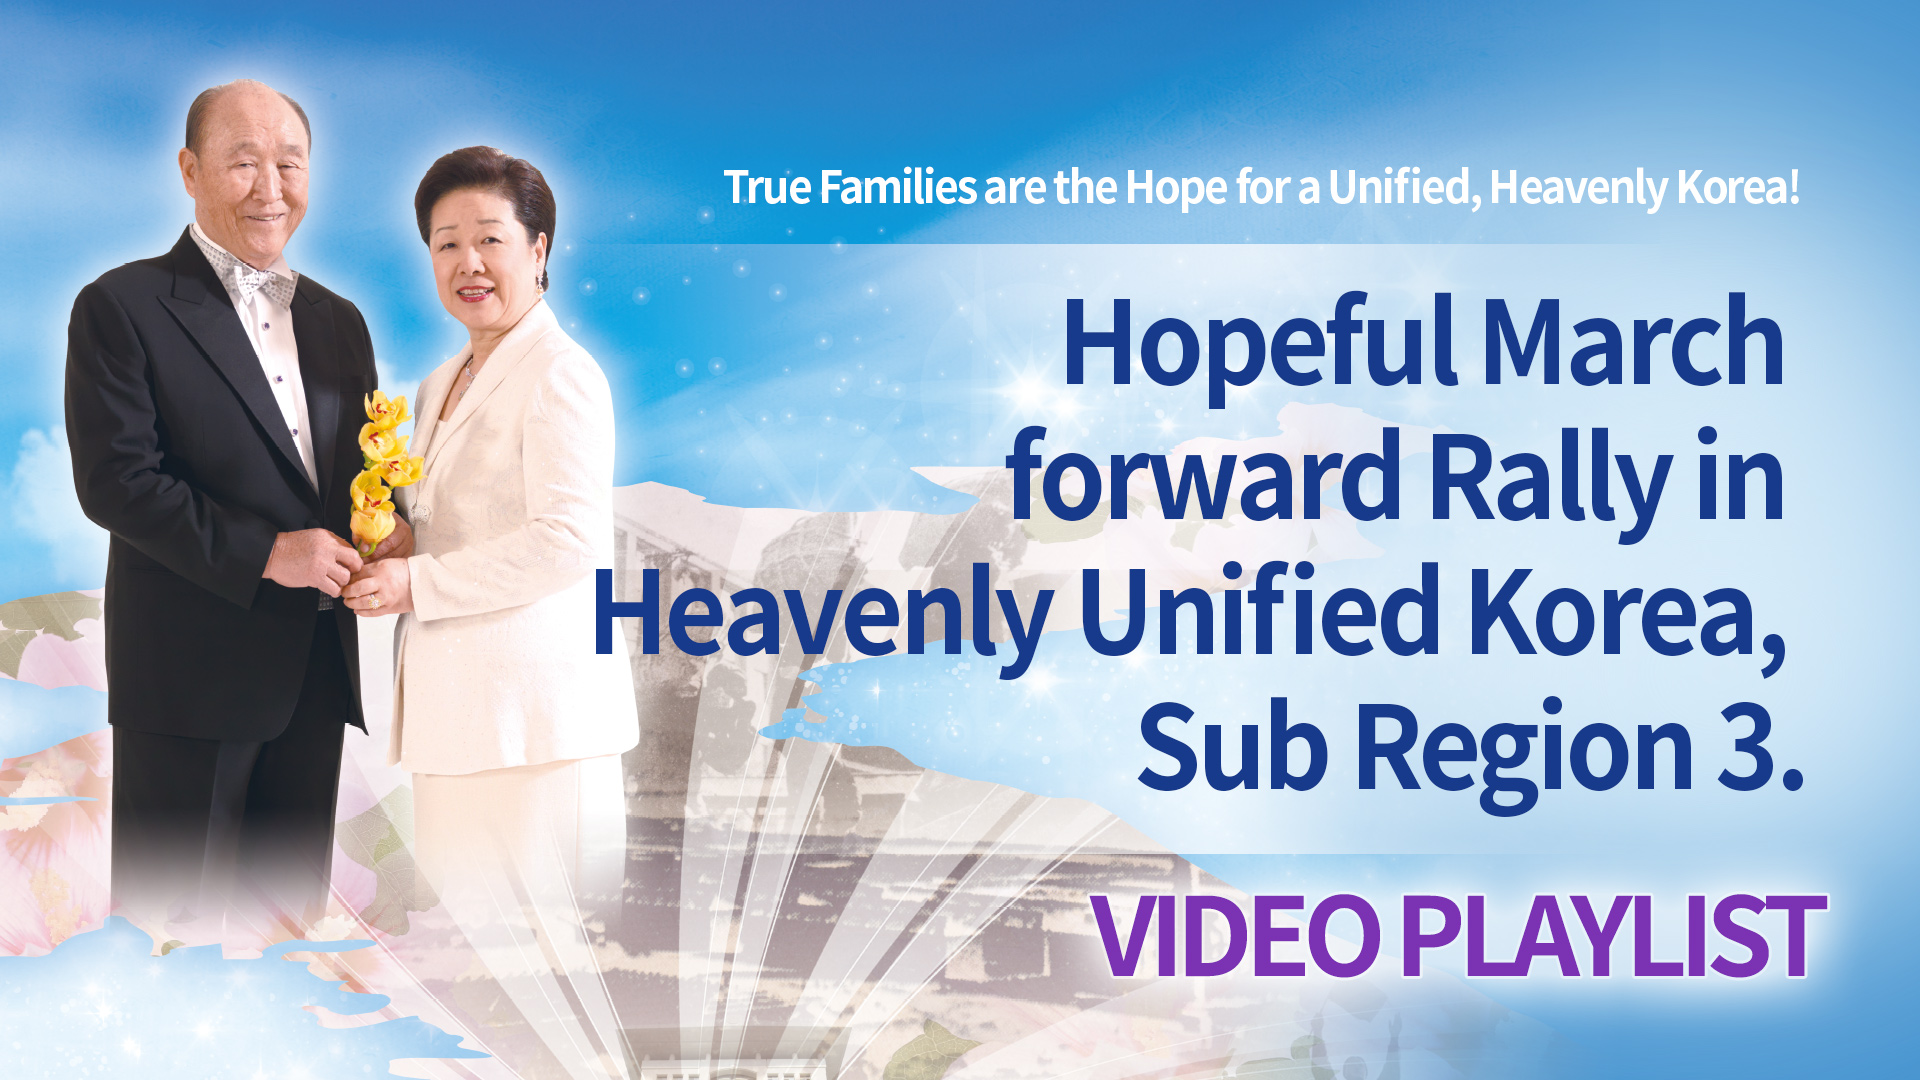 (Sub Region 3) Hopeful March forward Rally in Heavenly Unified Korea	